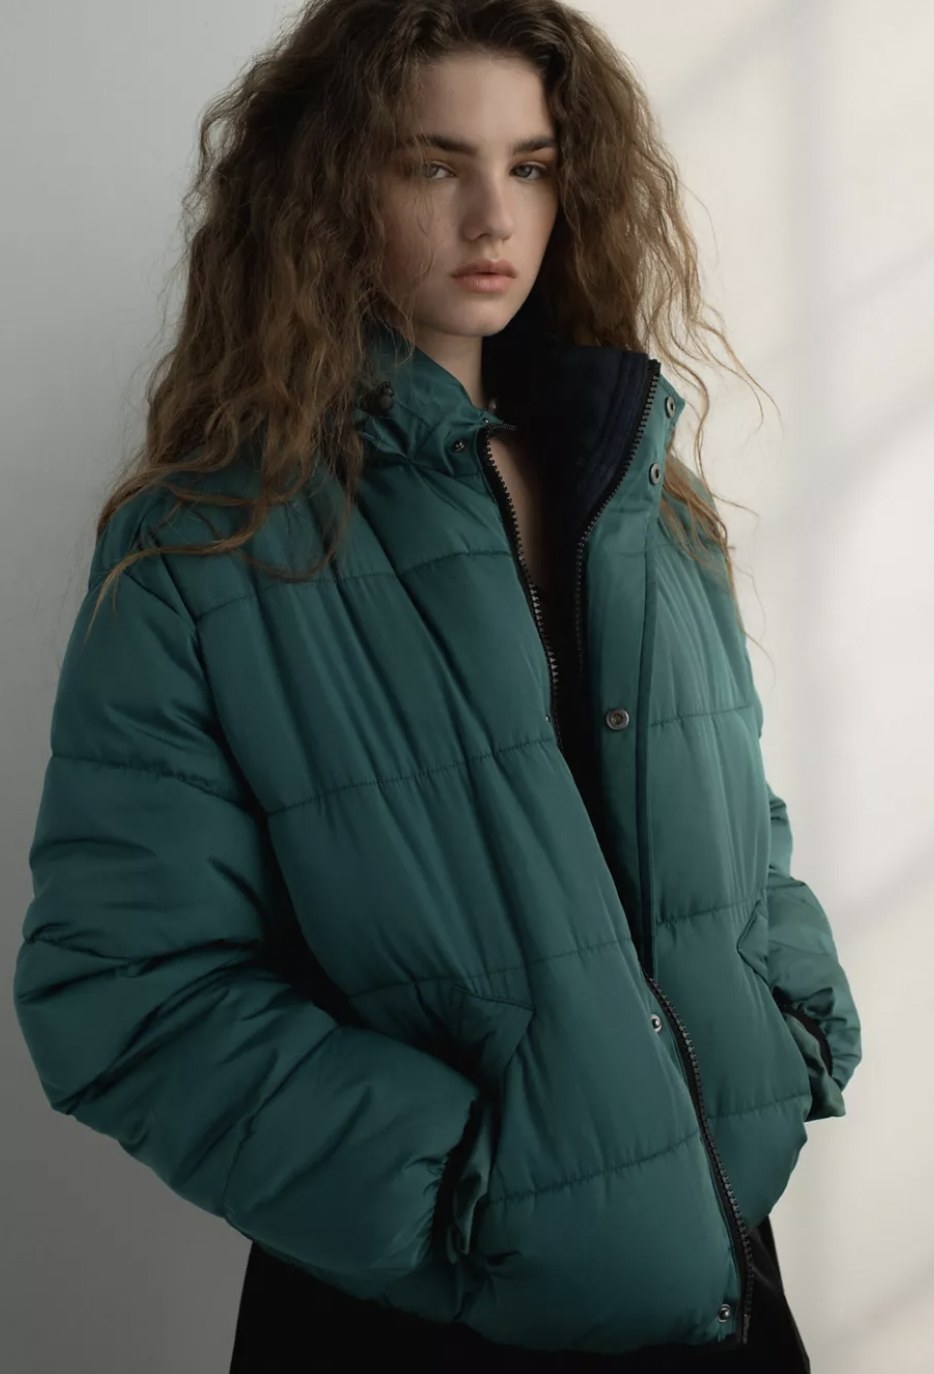 model wearing a teal puffer jacket